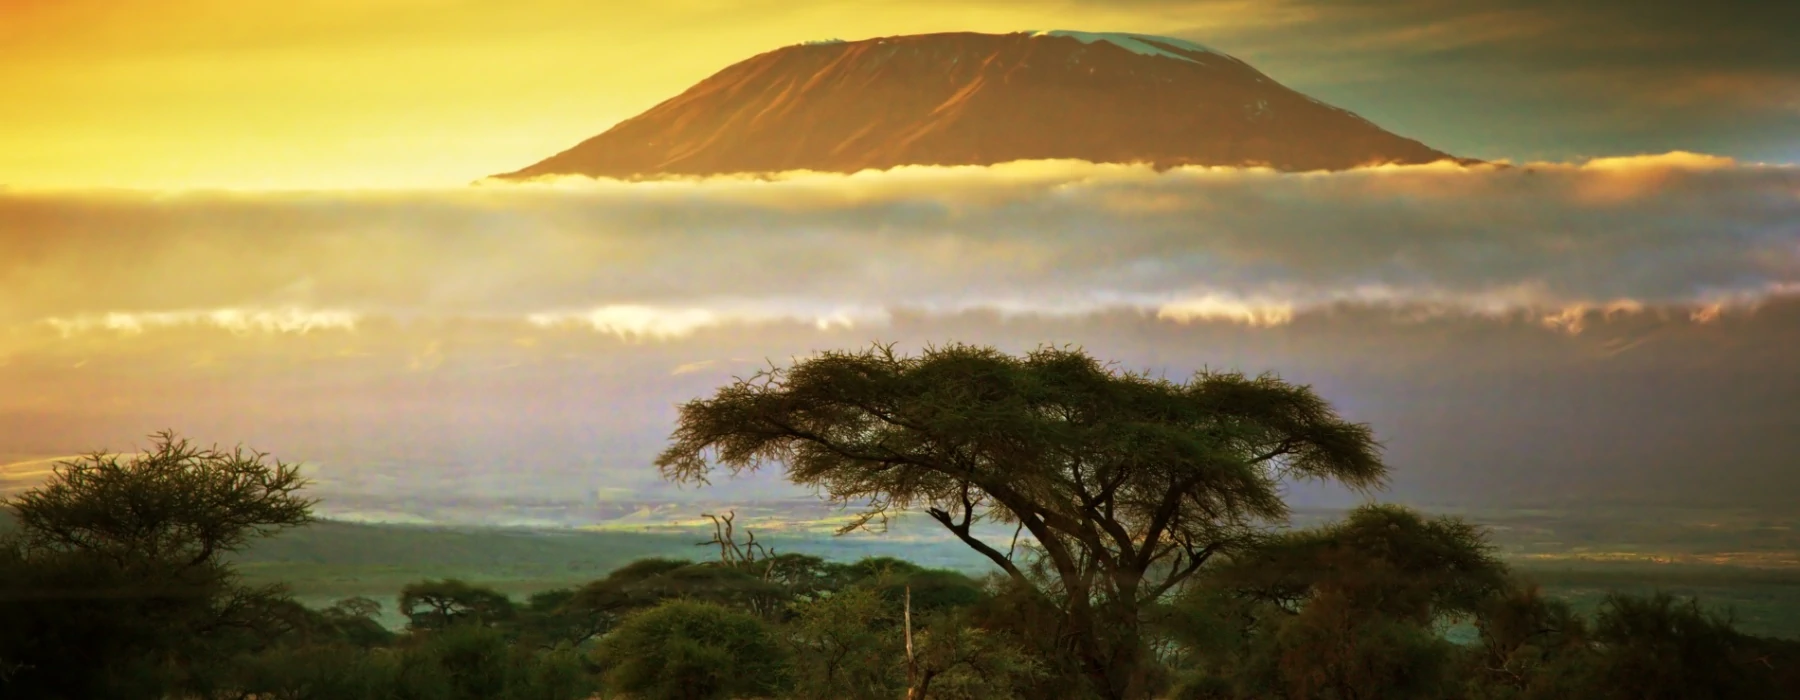 Prevent Breast Cancer Team Climb Mount Kilimanjaro Machame Route